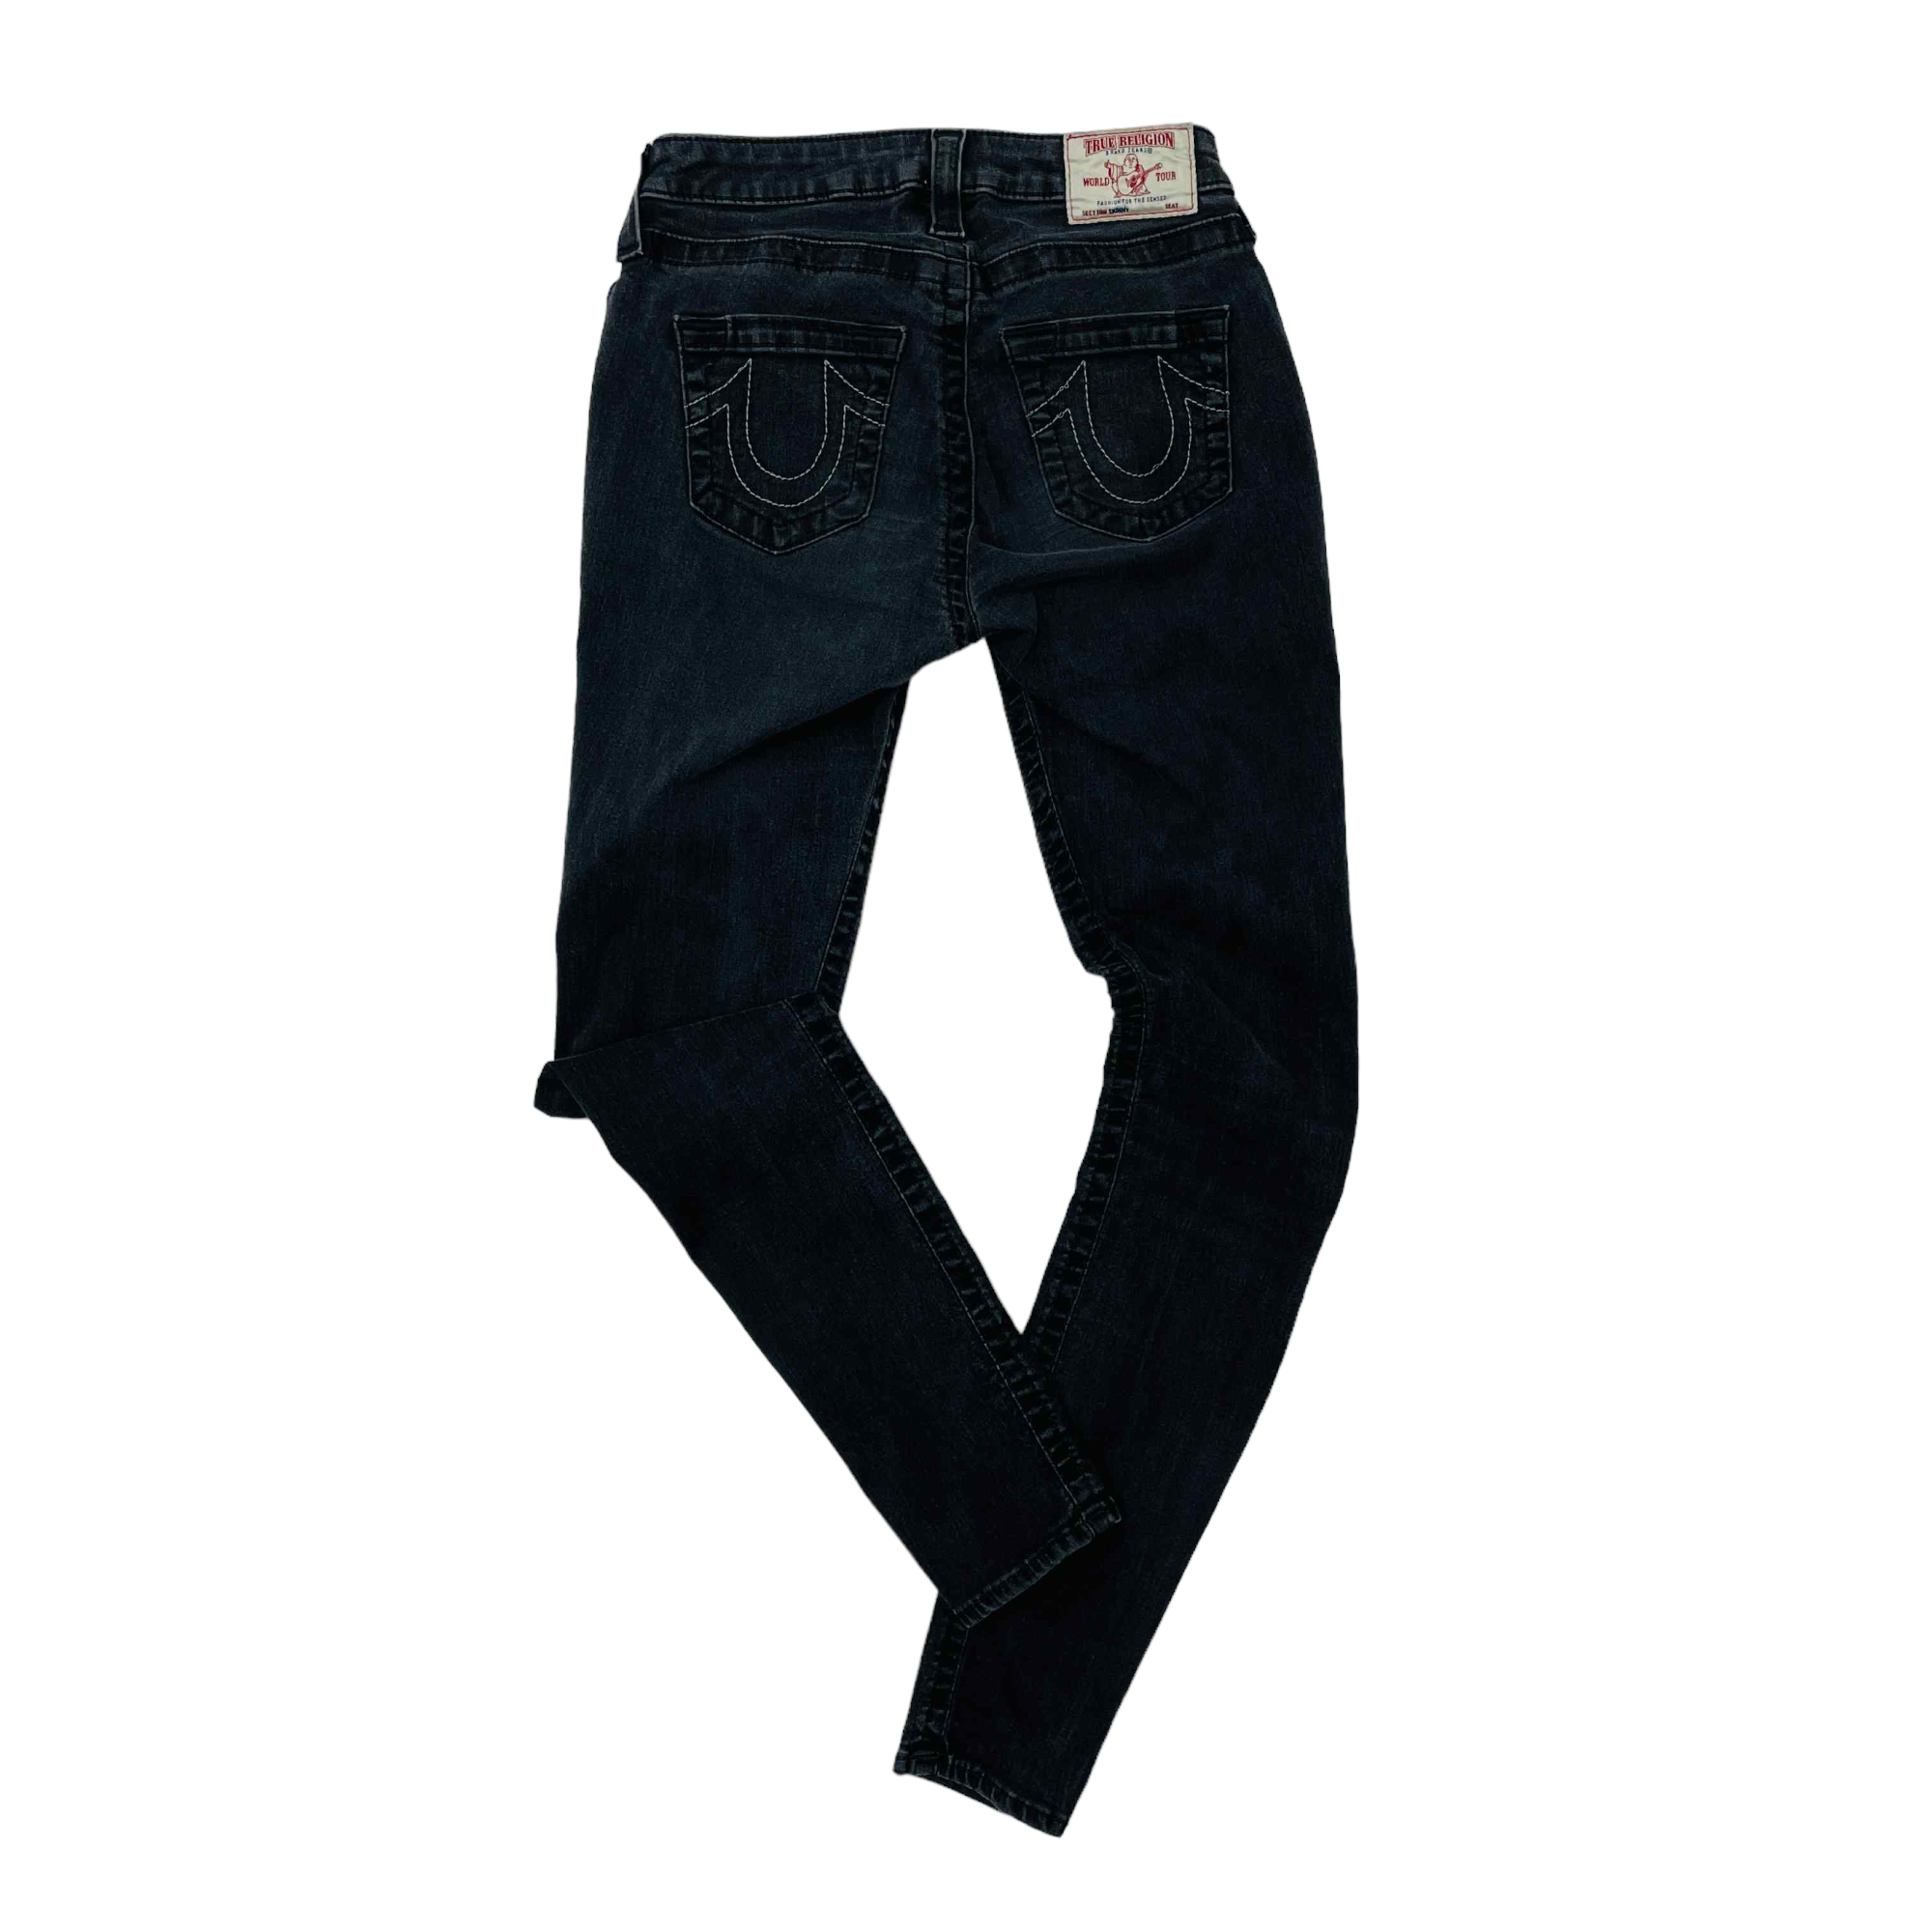 True Religion Jeans - W26 L30